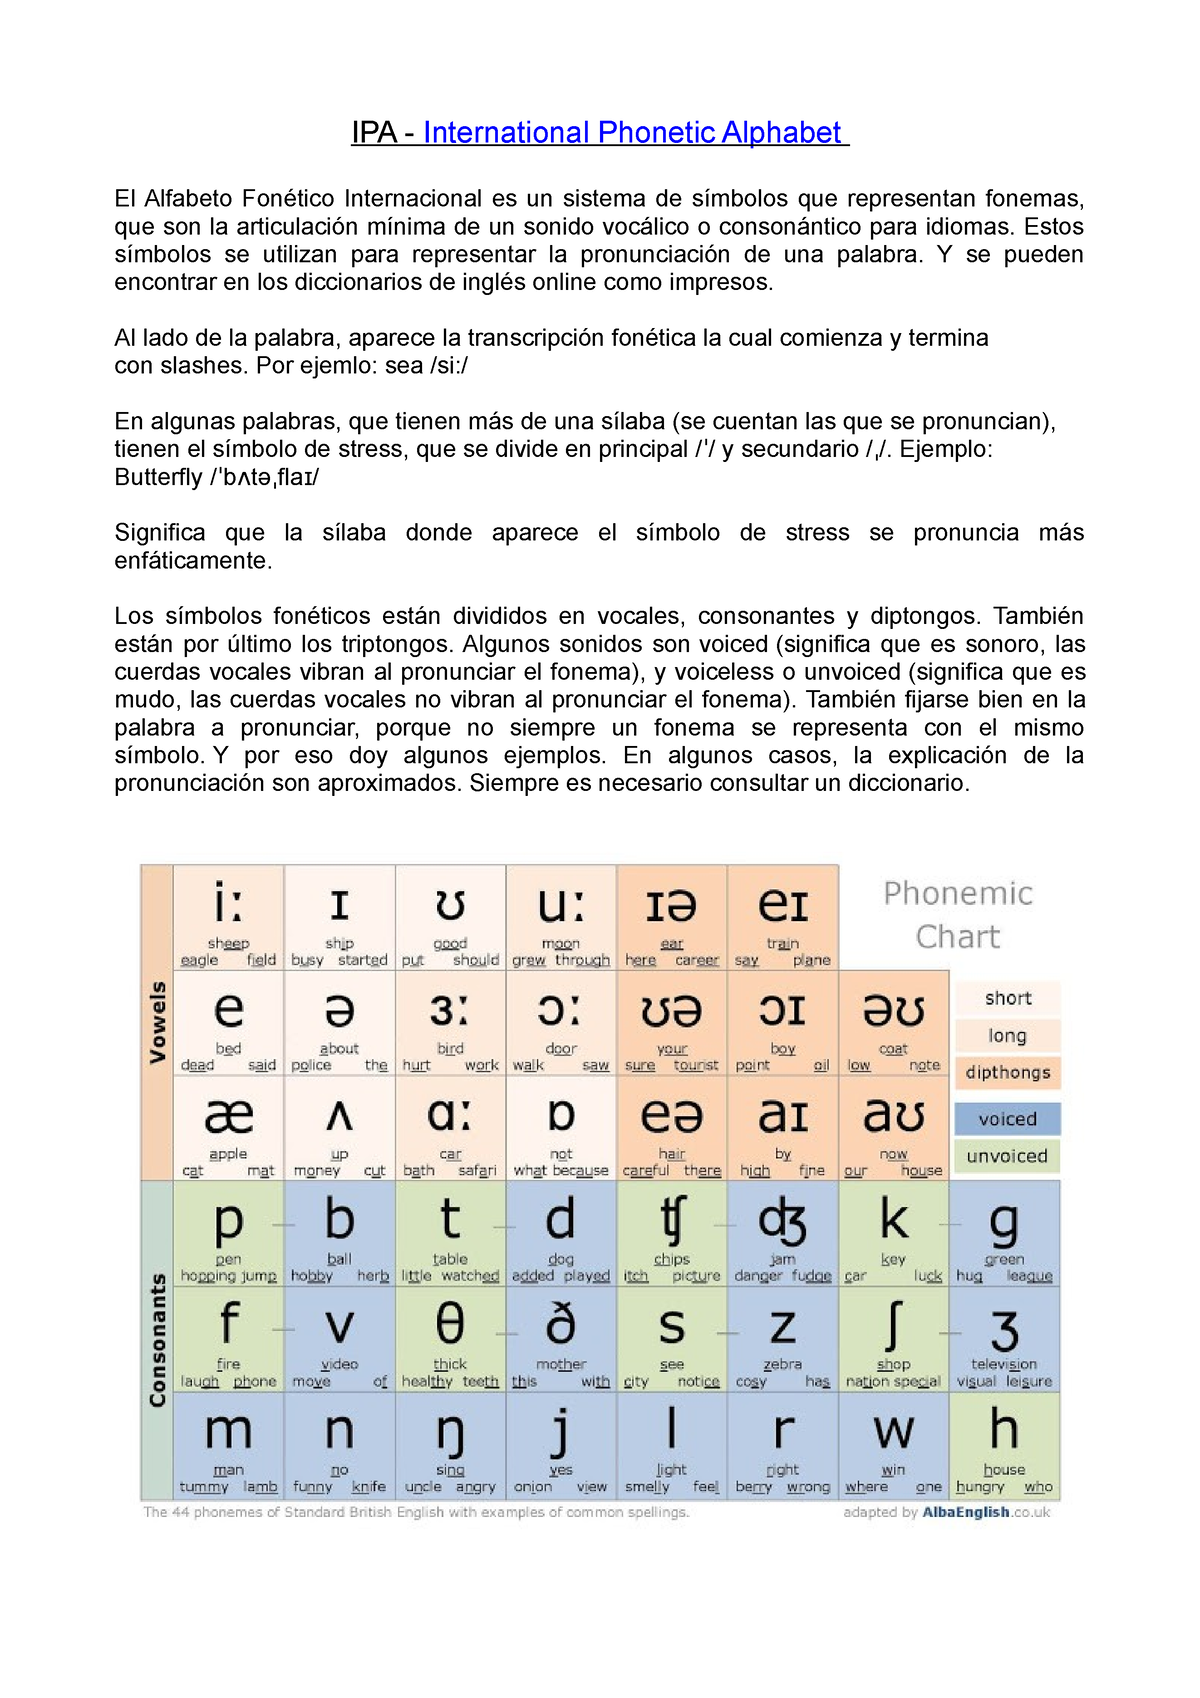 Apunte Teórico Fonética Ipa International Phonetic Alphabet El